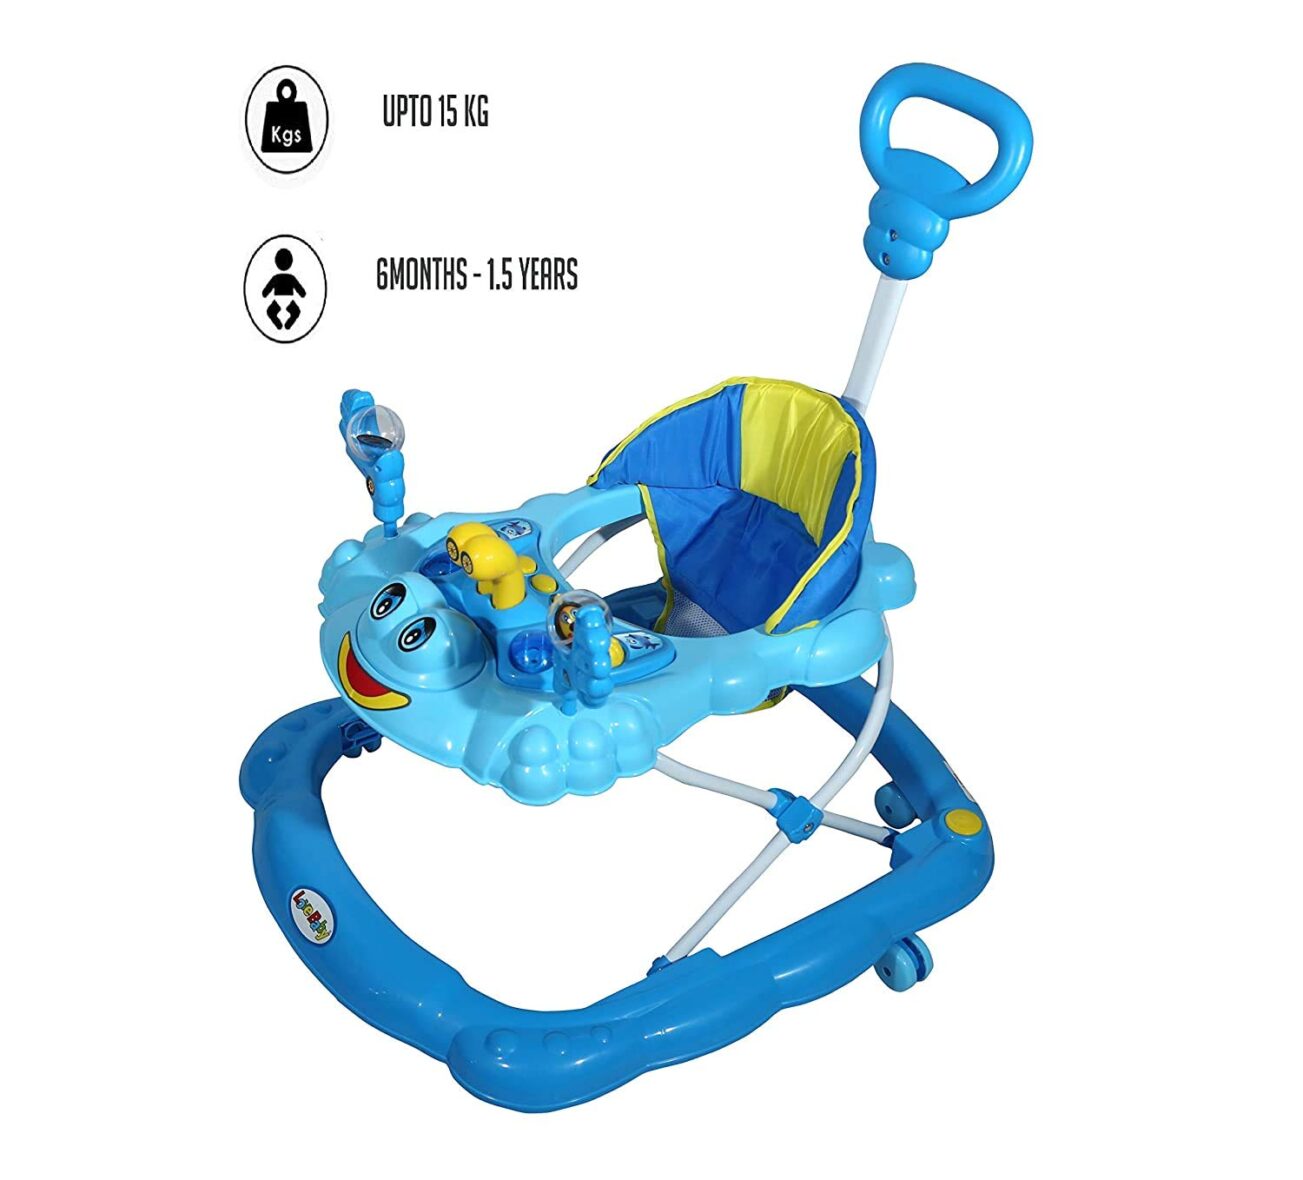 JoyRide Infant Musical Walker with Parent Push Handle, 3 Level Height Adjustment,Music & Light- Blue